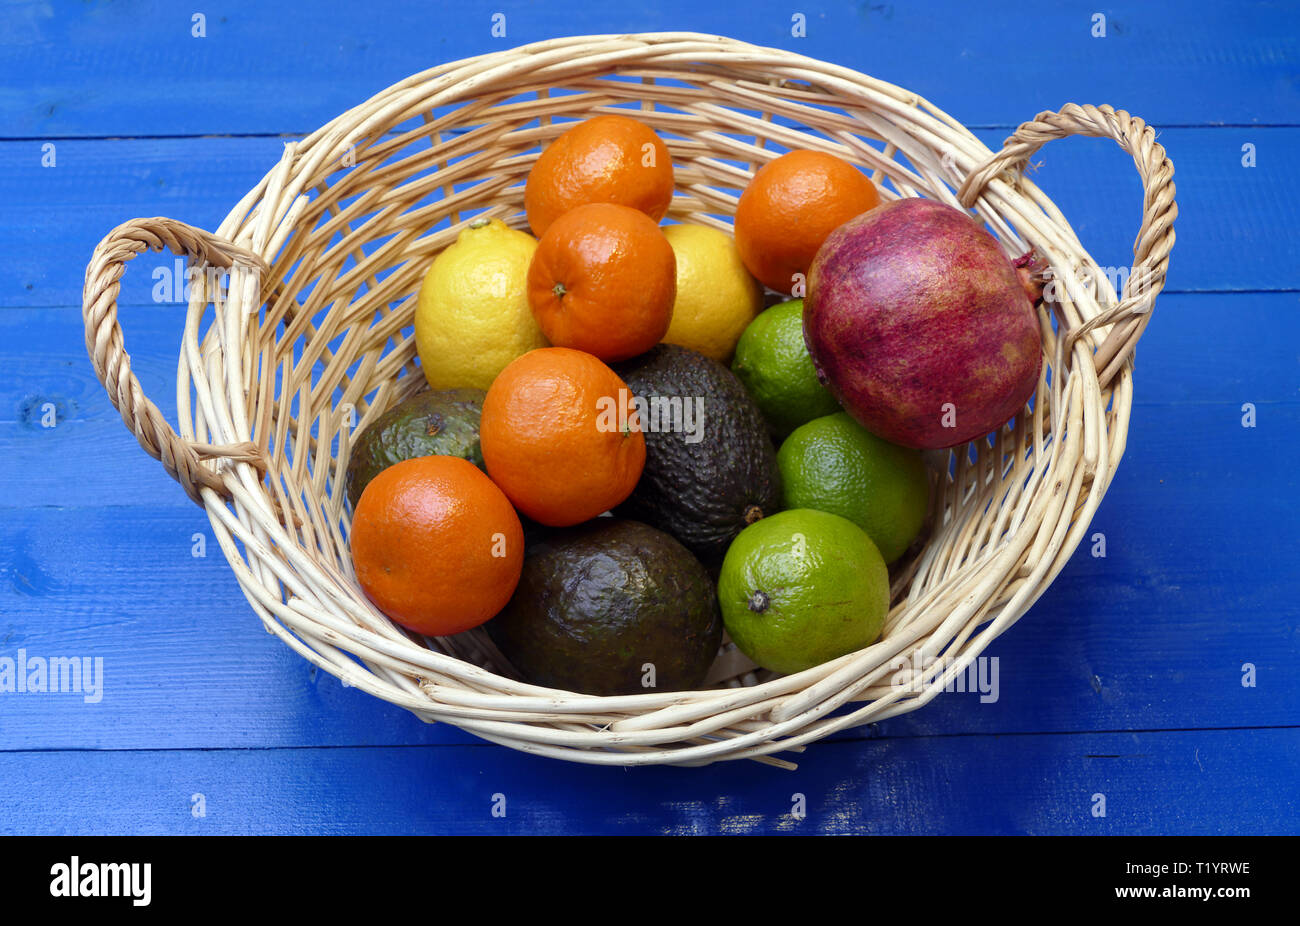 Exotische Früchte im Korb: Zitronen, Granadilla (Fruit of the Loom), Mandarinen, Avocados. Stockfoto